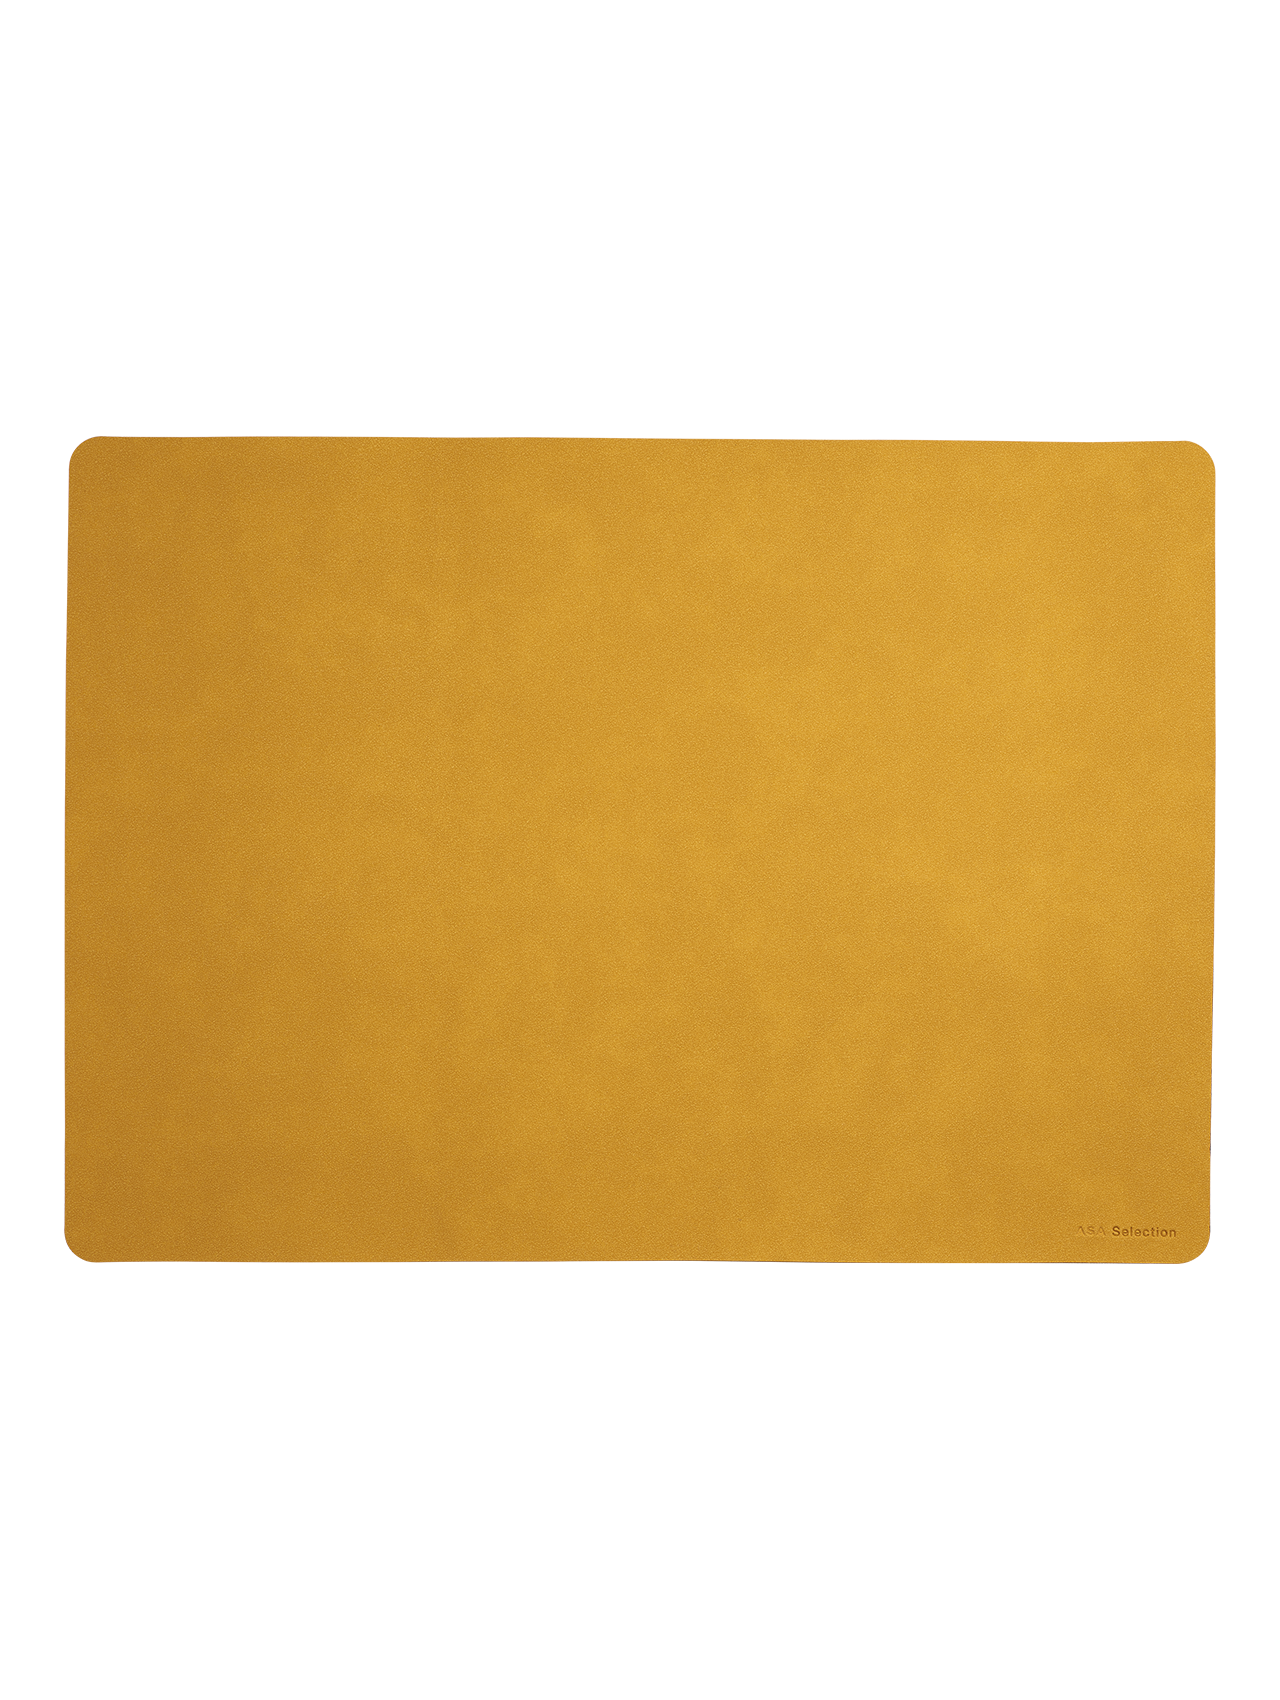 ASA leather optic Tischset eckig amber 46 x 33 cm PU